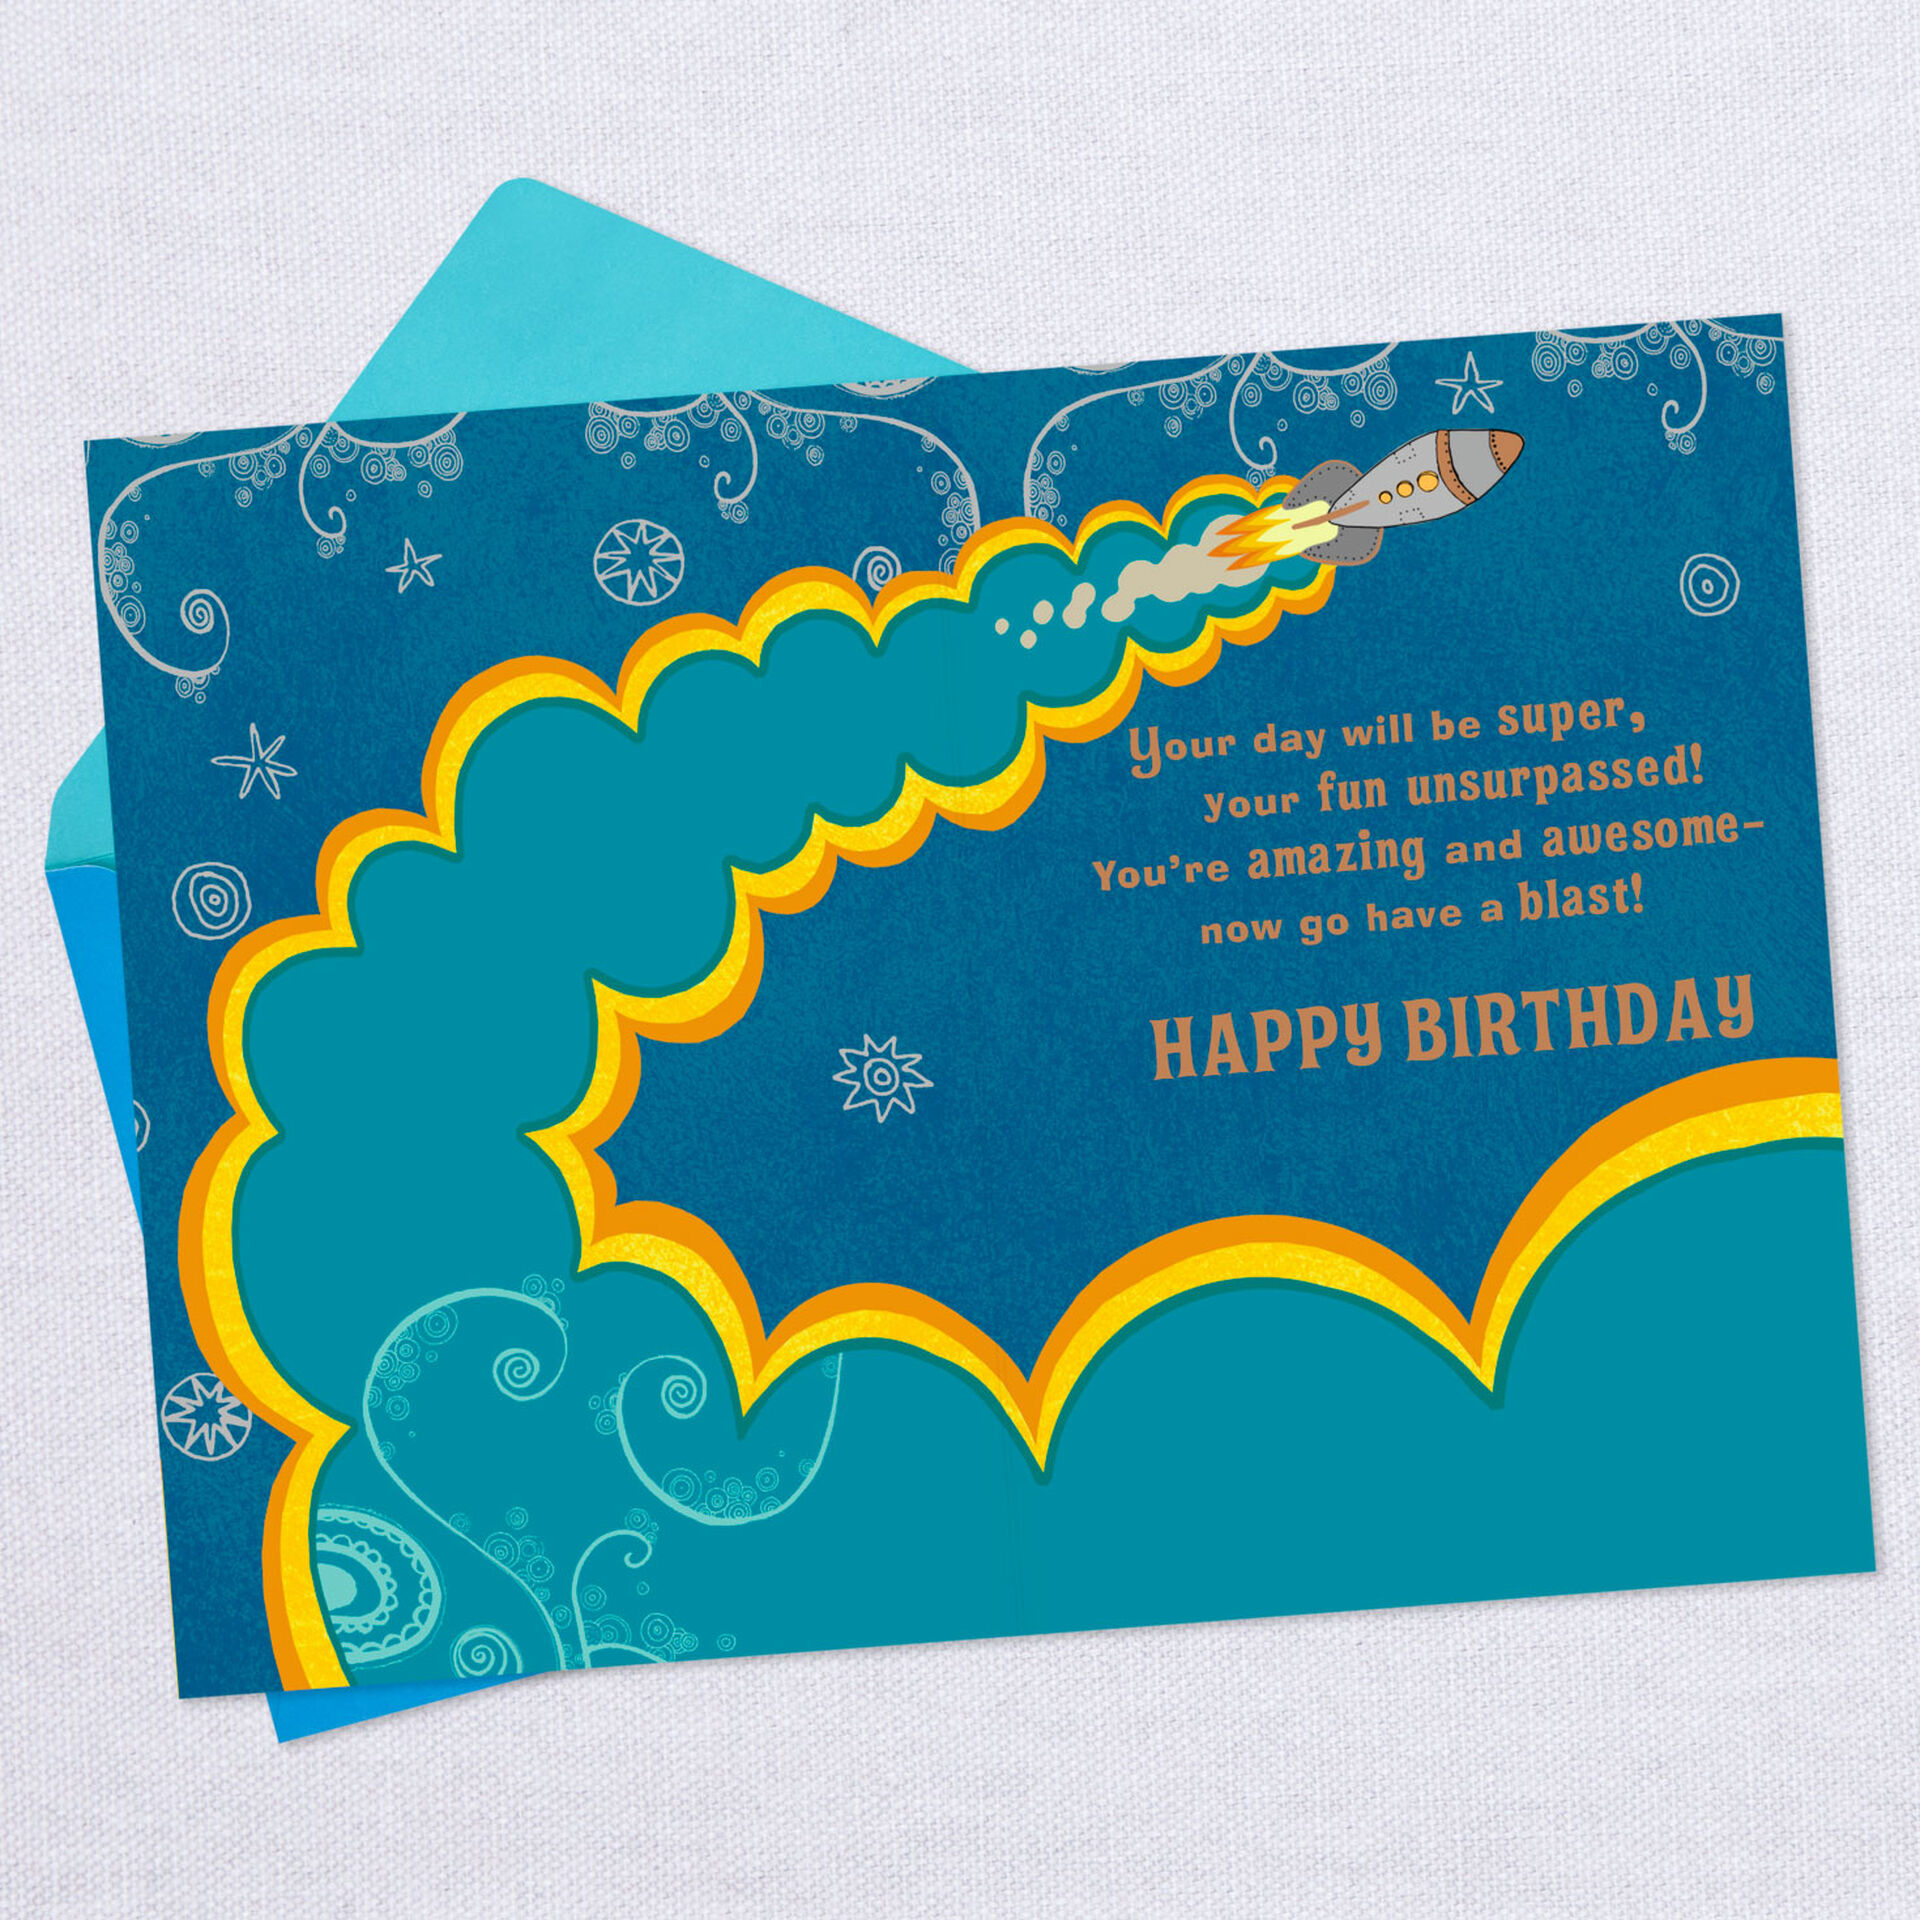 Have-a-Blast-Birthday-Card-for-Grandson_299HKB5843_03